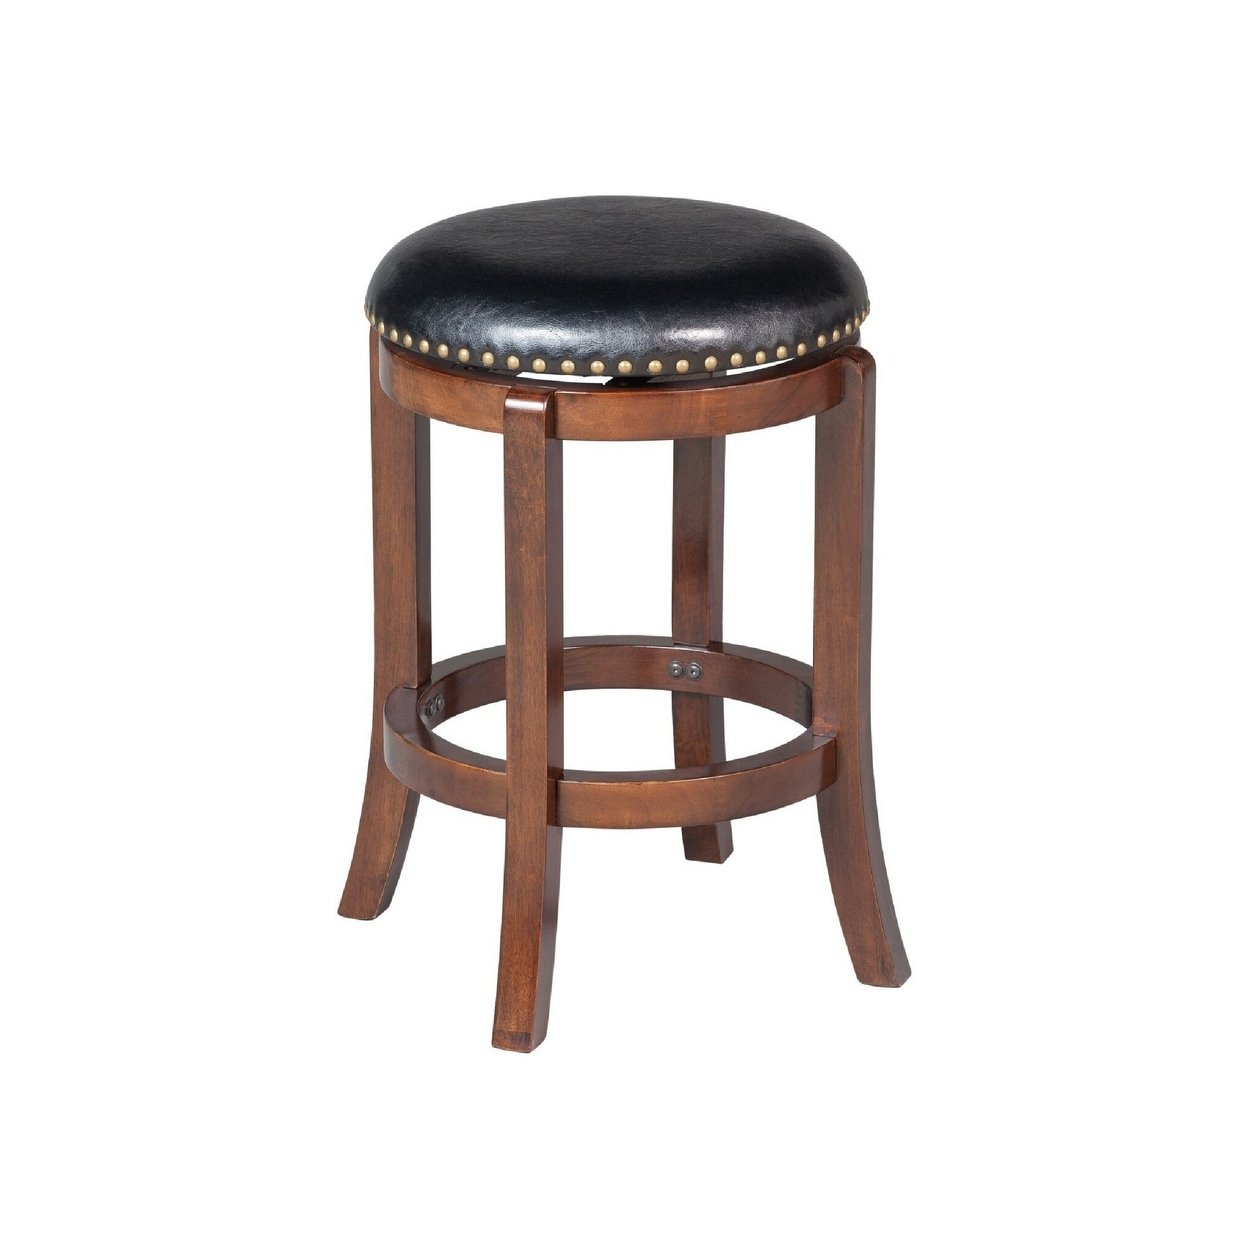 Ovi 24 Inch Wooden Swivel Counter Stool, Faux Leather Seat, Walnut Brown- Saltoro Sherpi